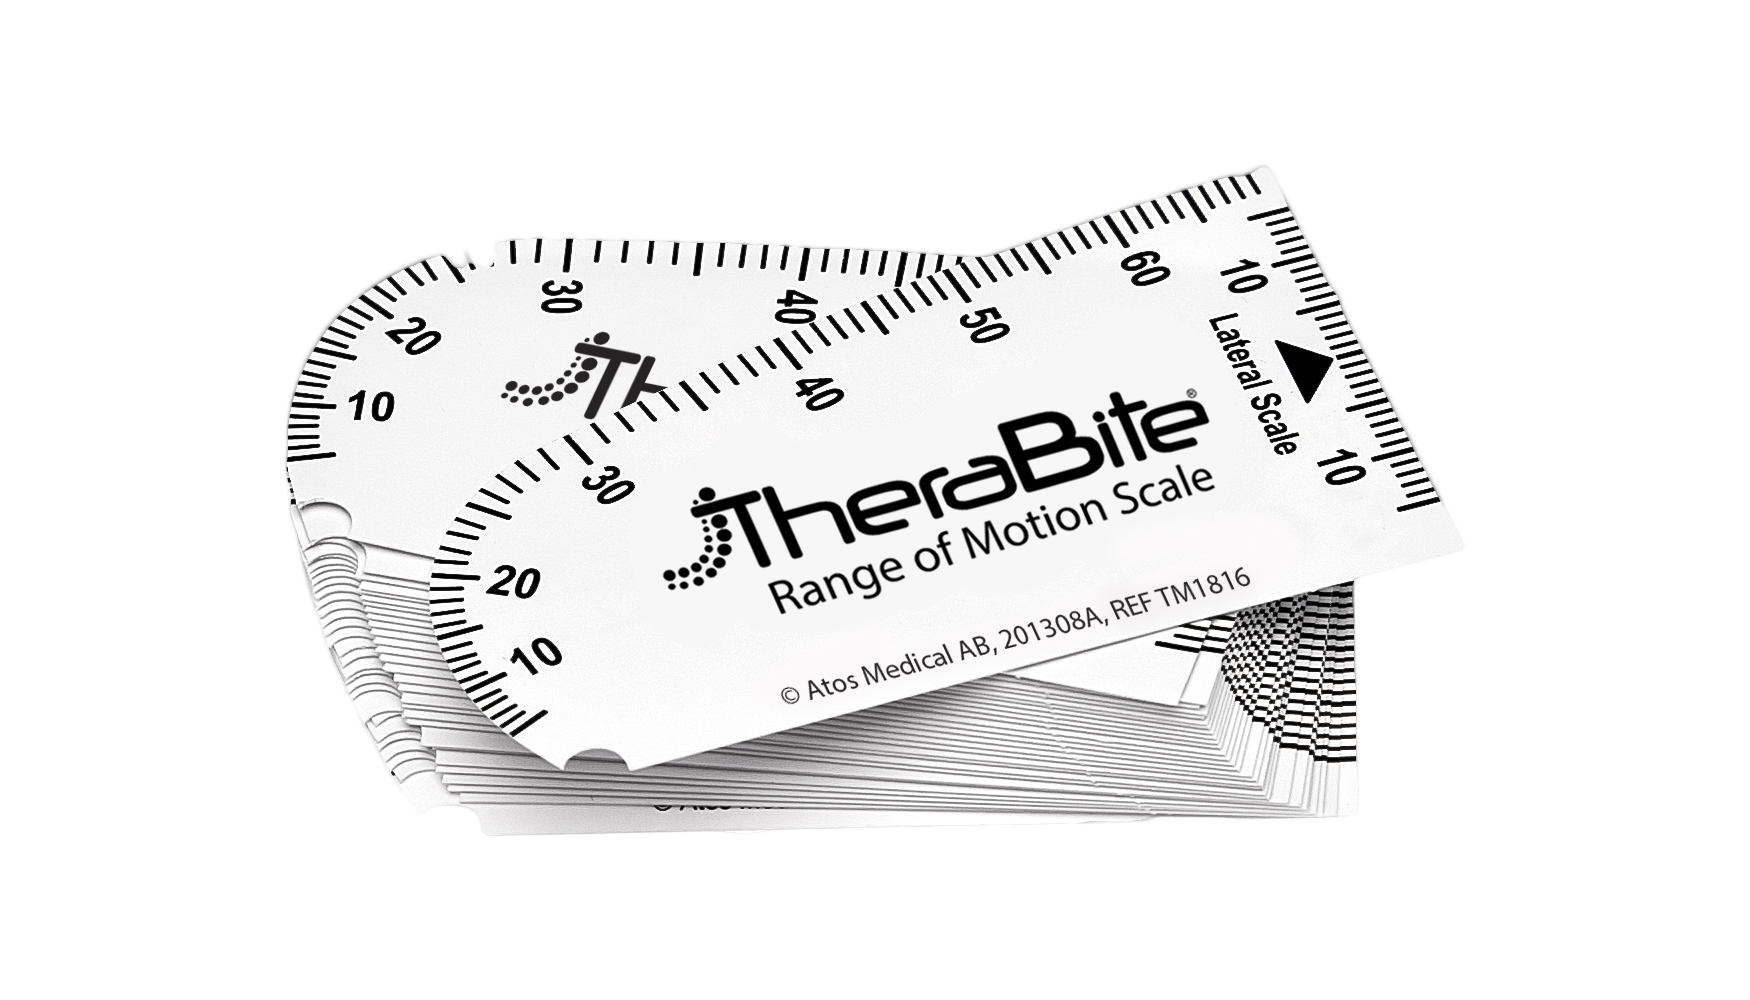 therabite atos medical range of motion scale